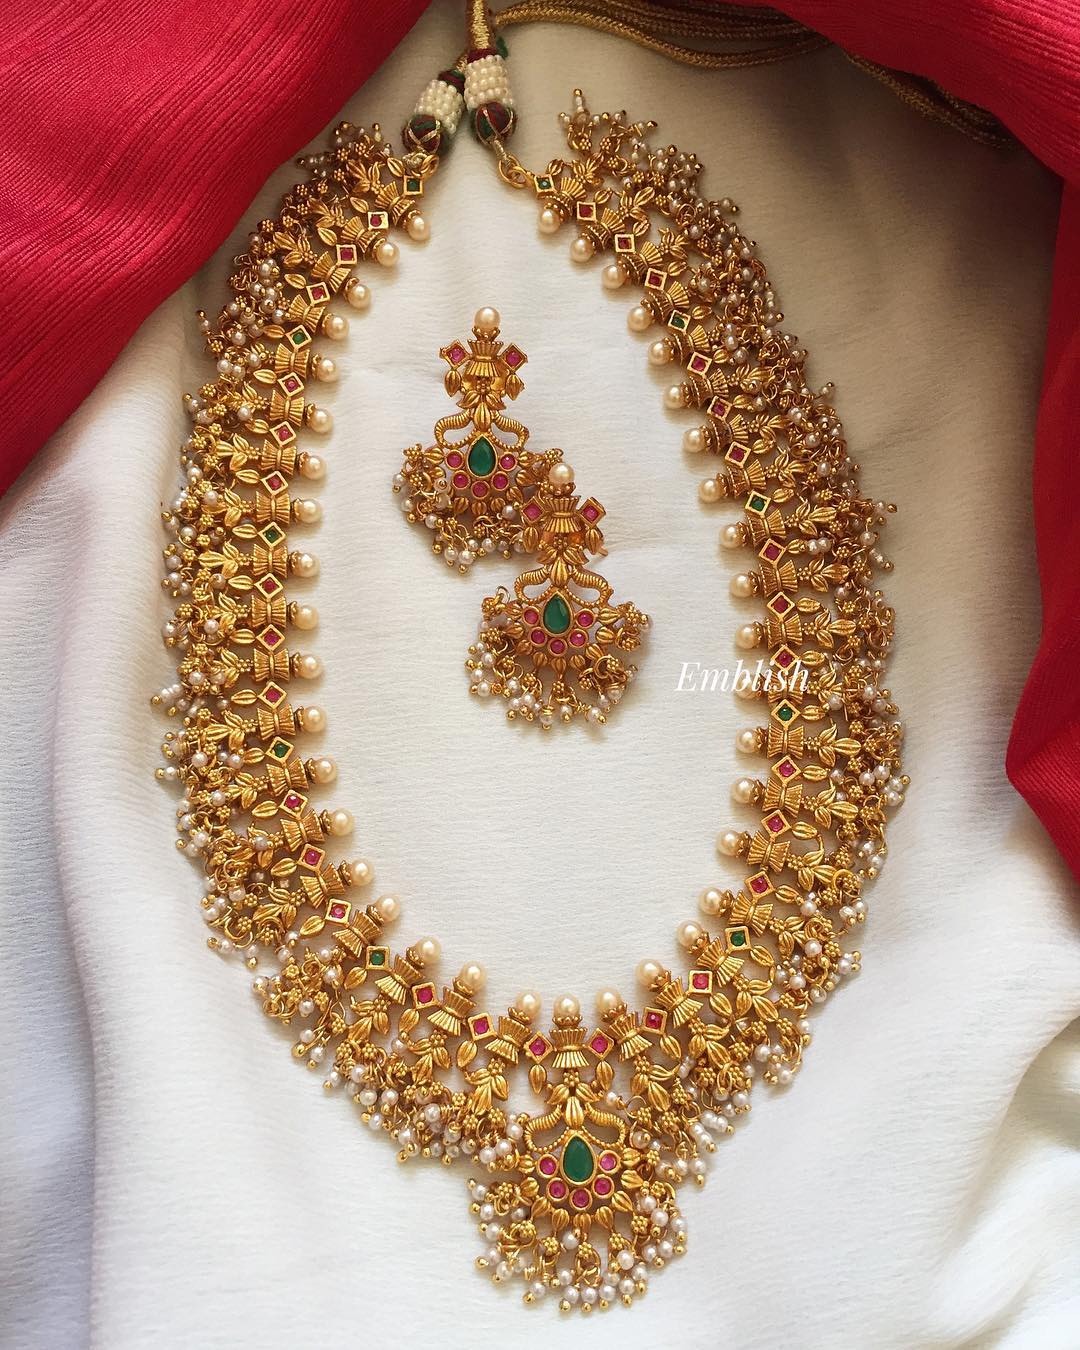 Gorgeous Long Necklace Set From Emblish